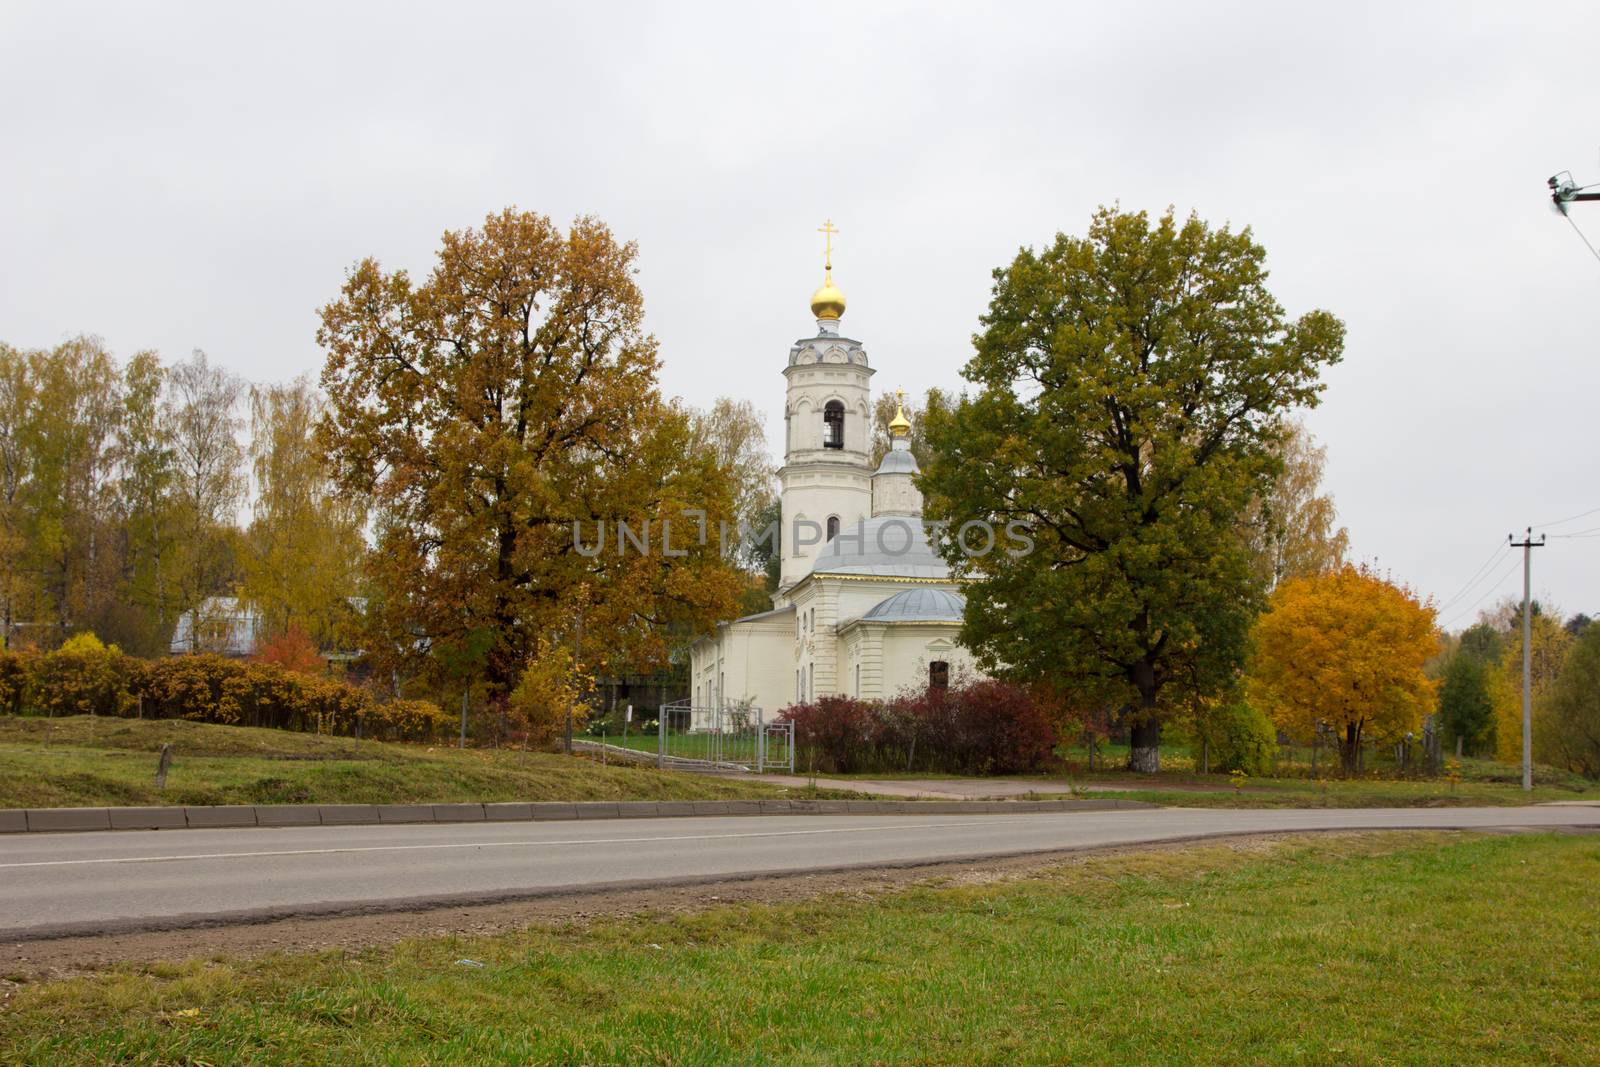 White ortodox church